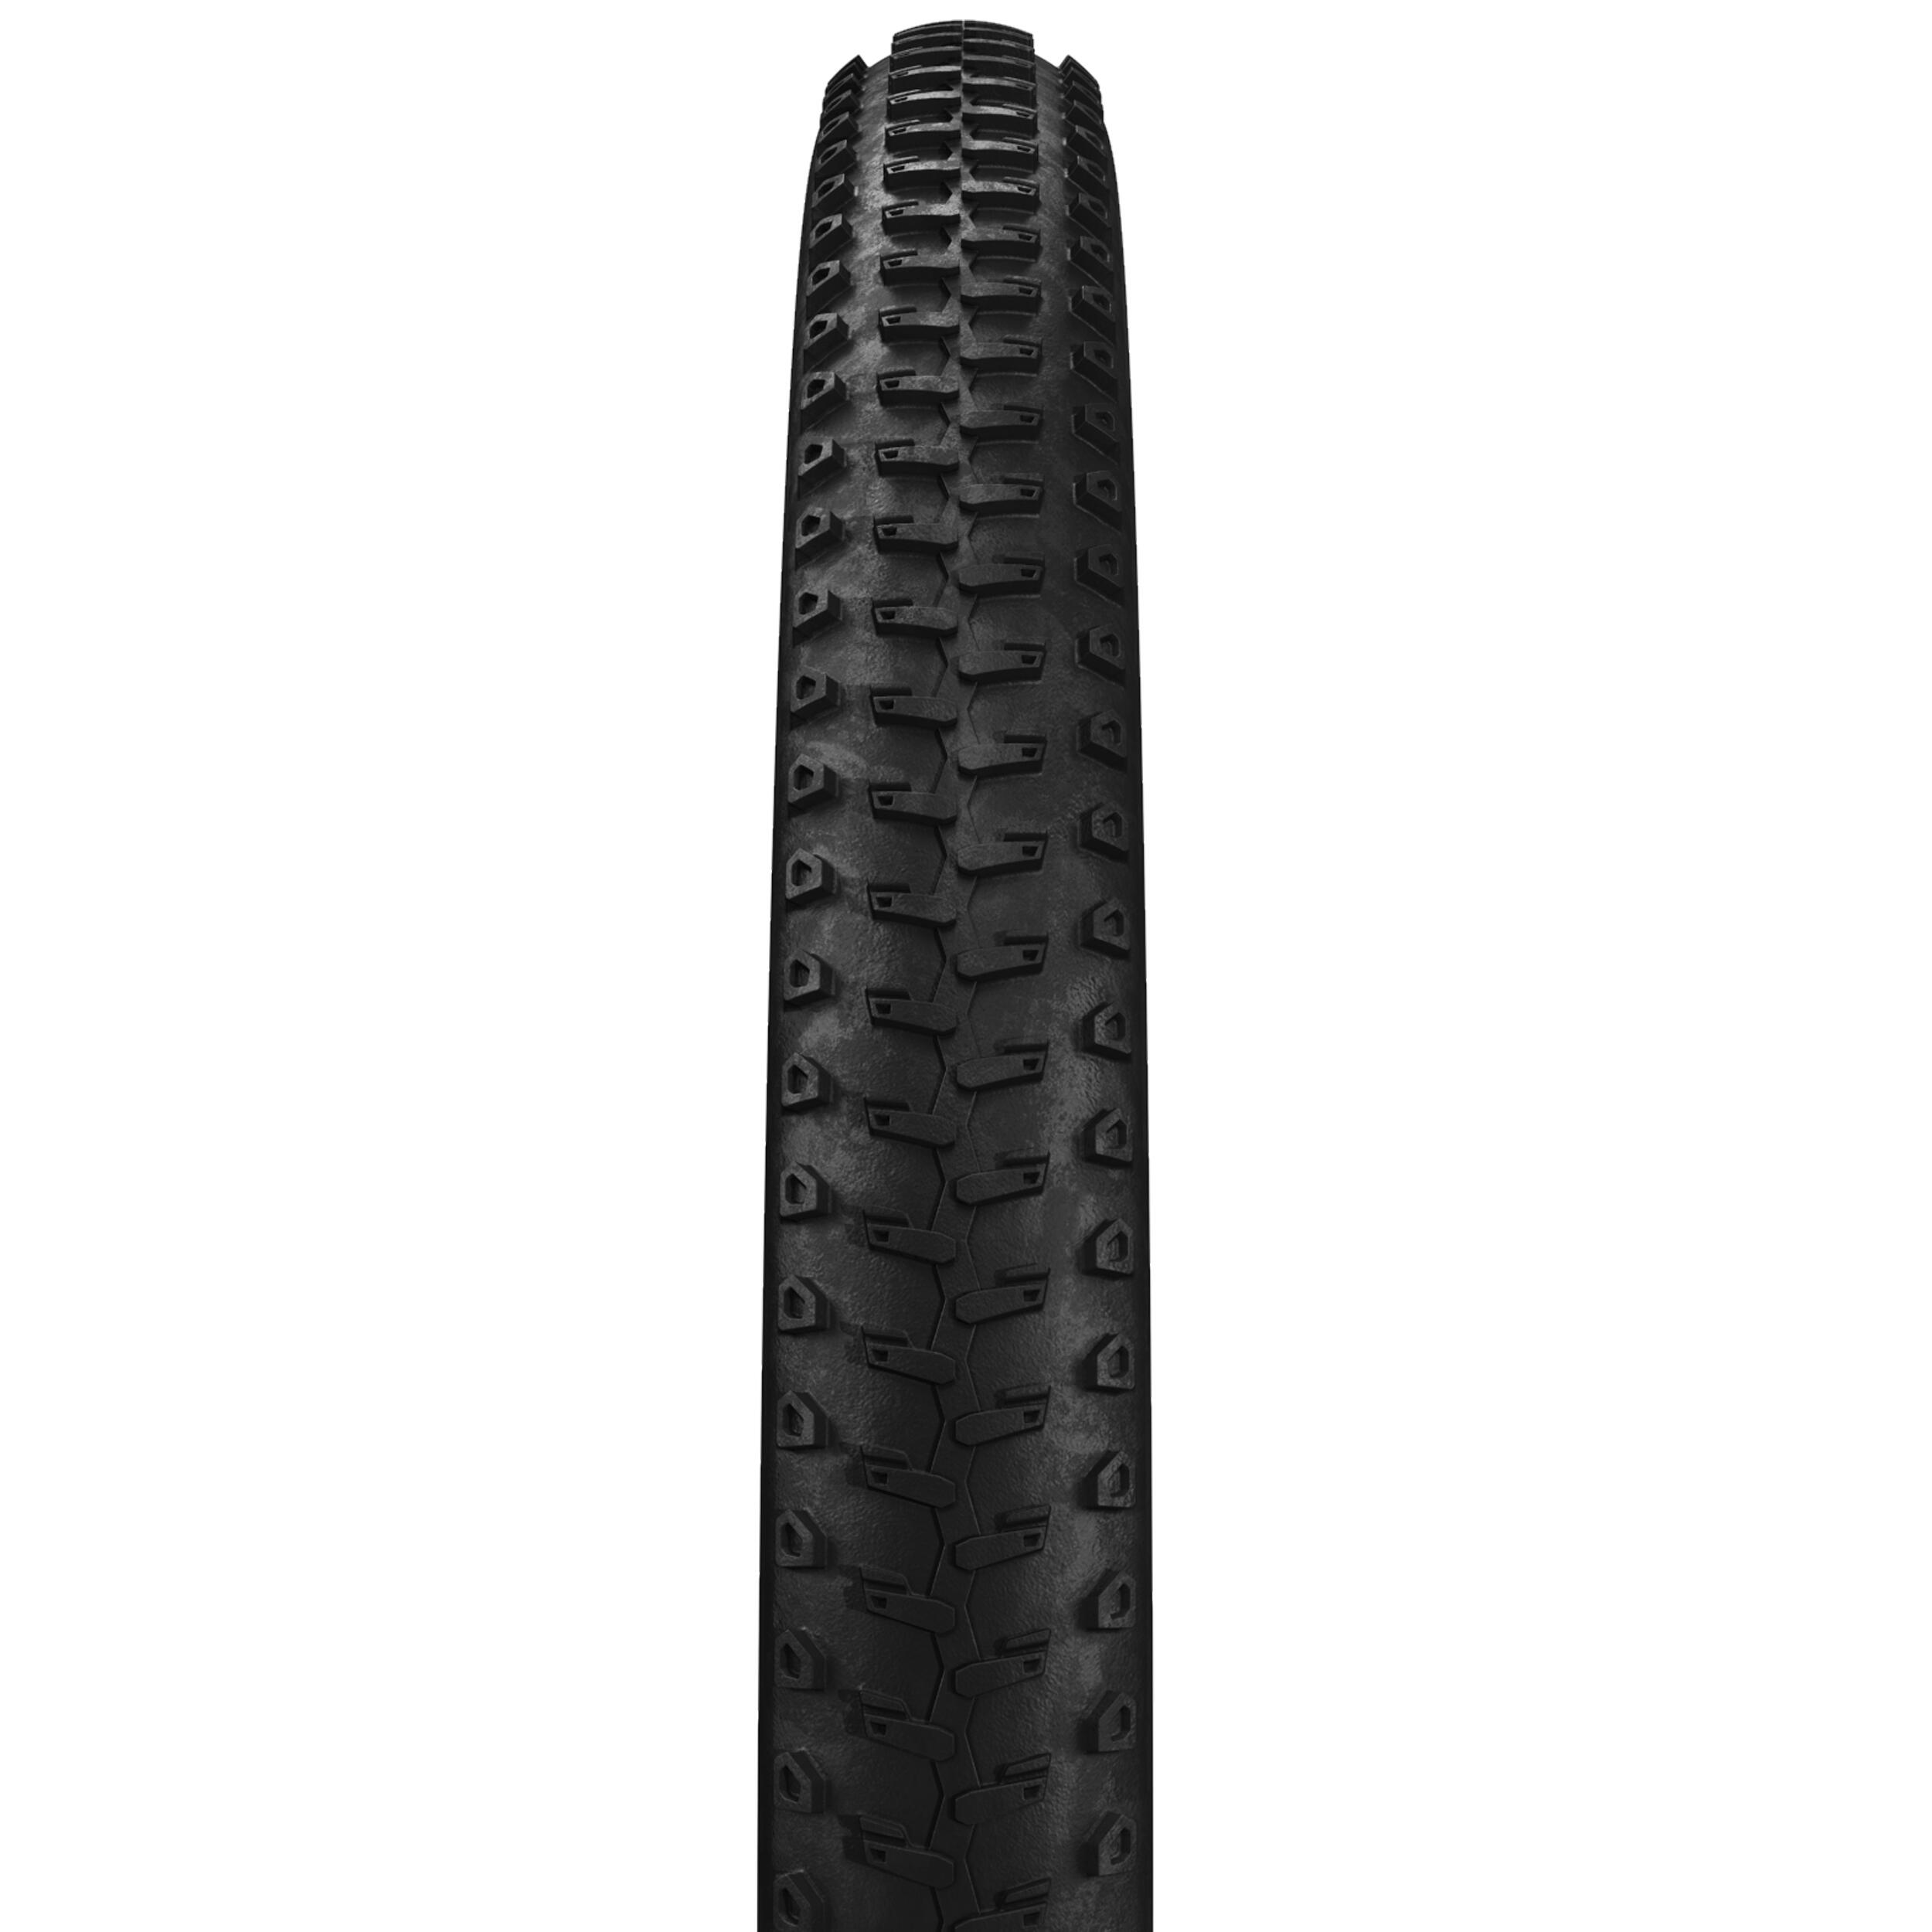 All-Terrain 9-Speed 29x2.10 Soft Bead Mountain Bike Tire - ROCKRIDER